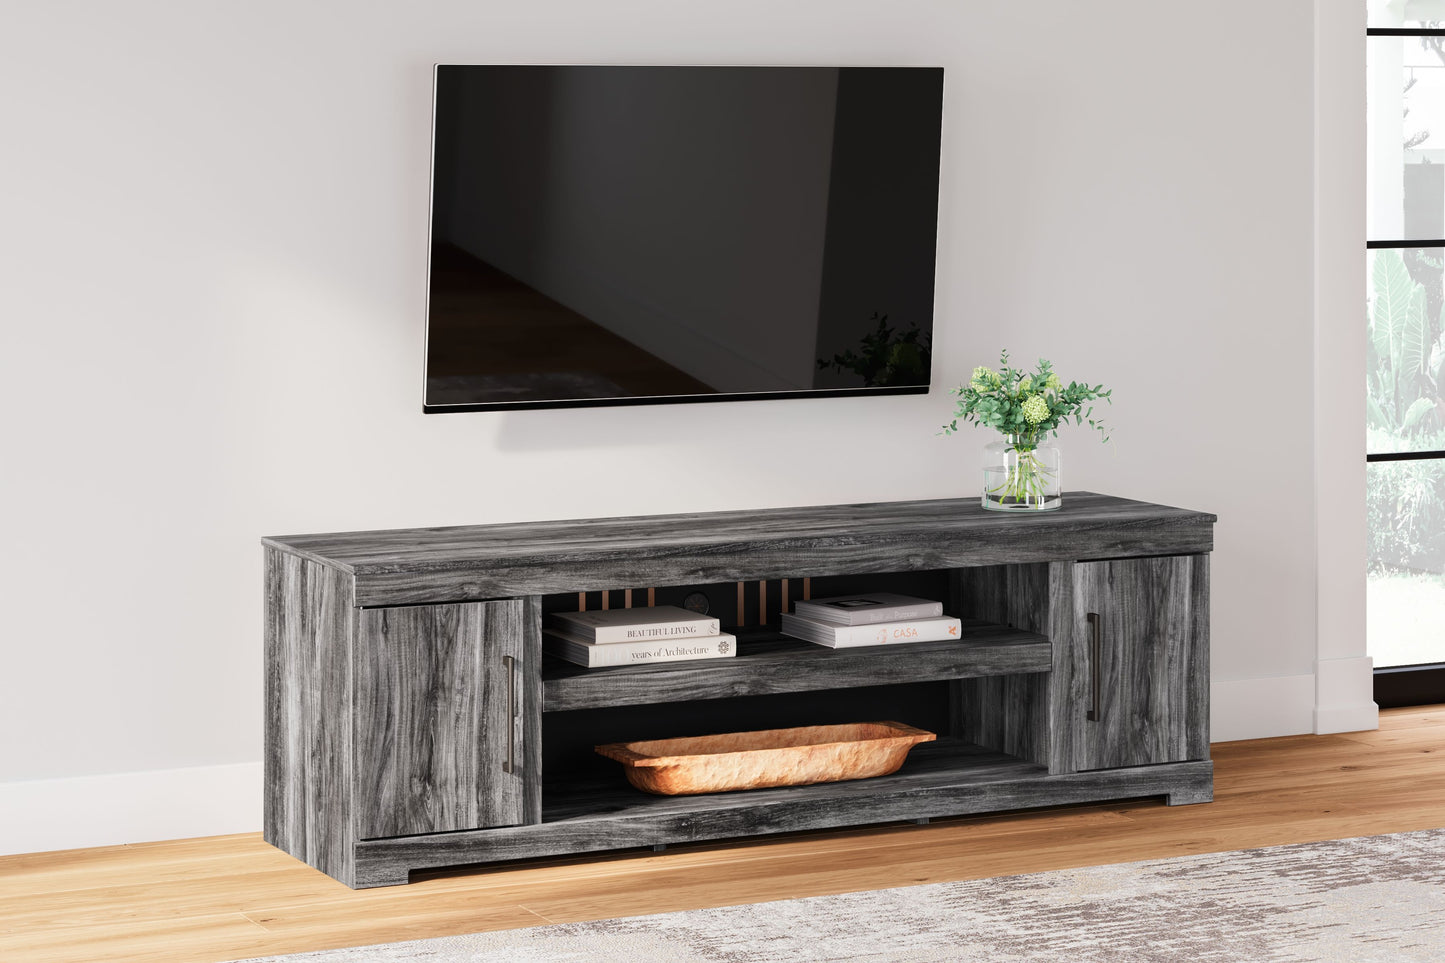 Baystorm - Gray - Xl TV Stand W/Fireplace Option